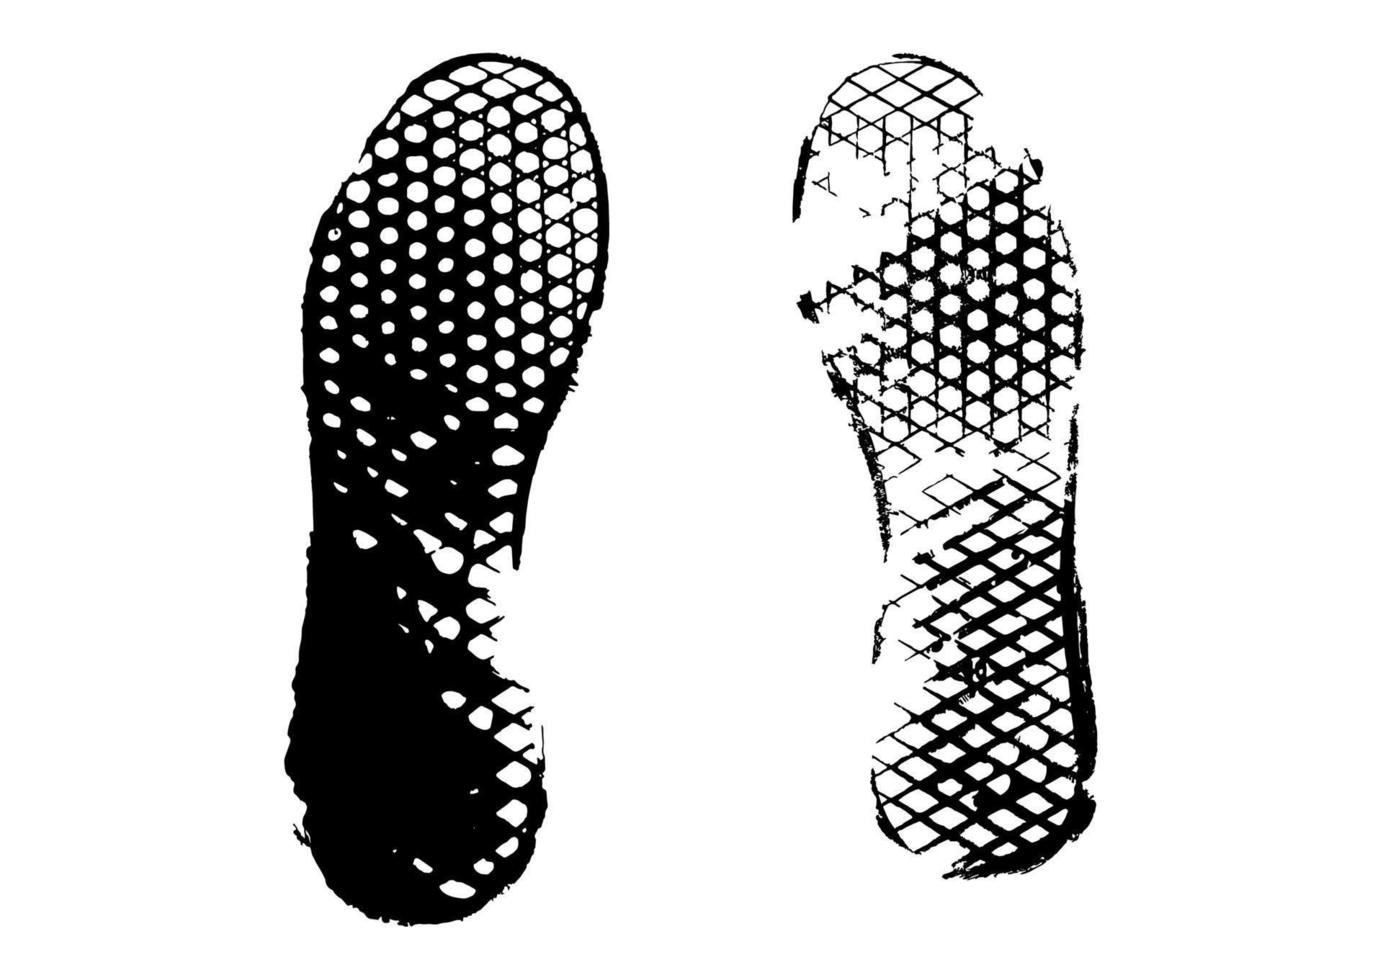 impronte umane scarpe da ginnastica silhouette vettore